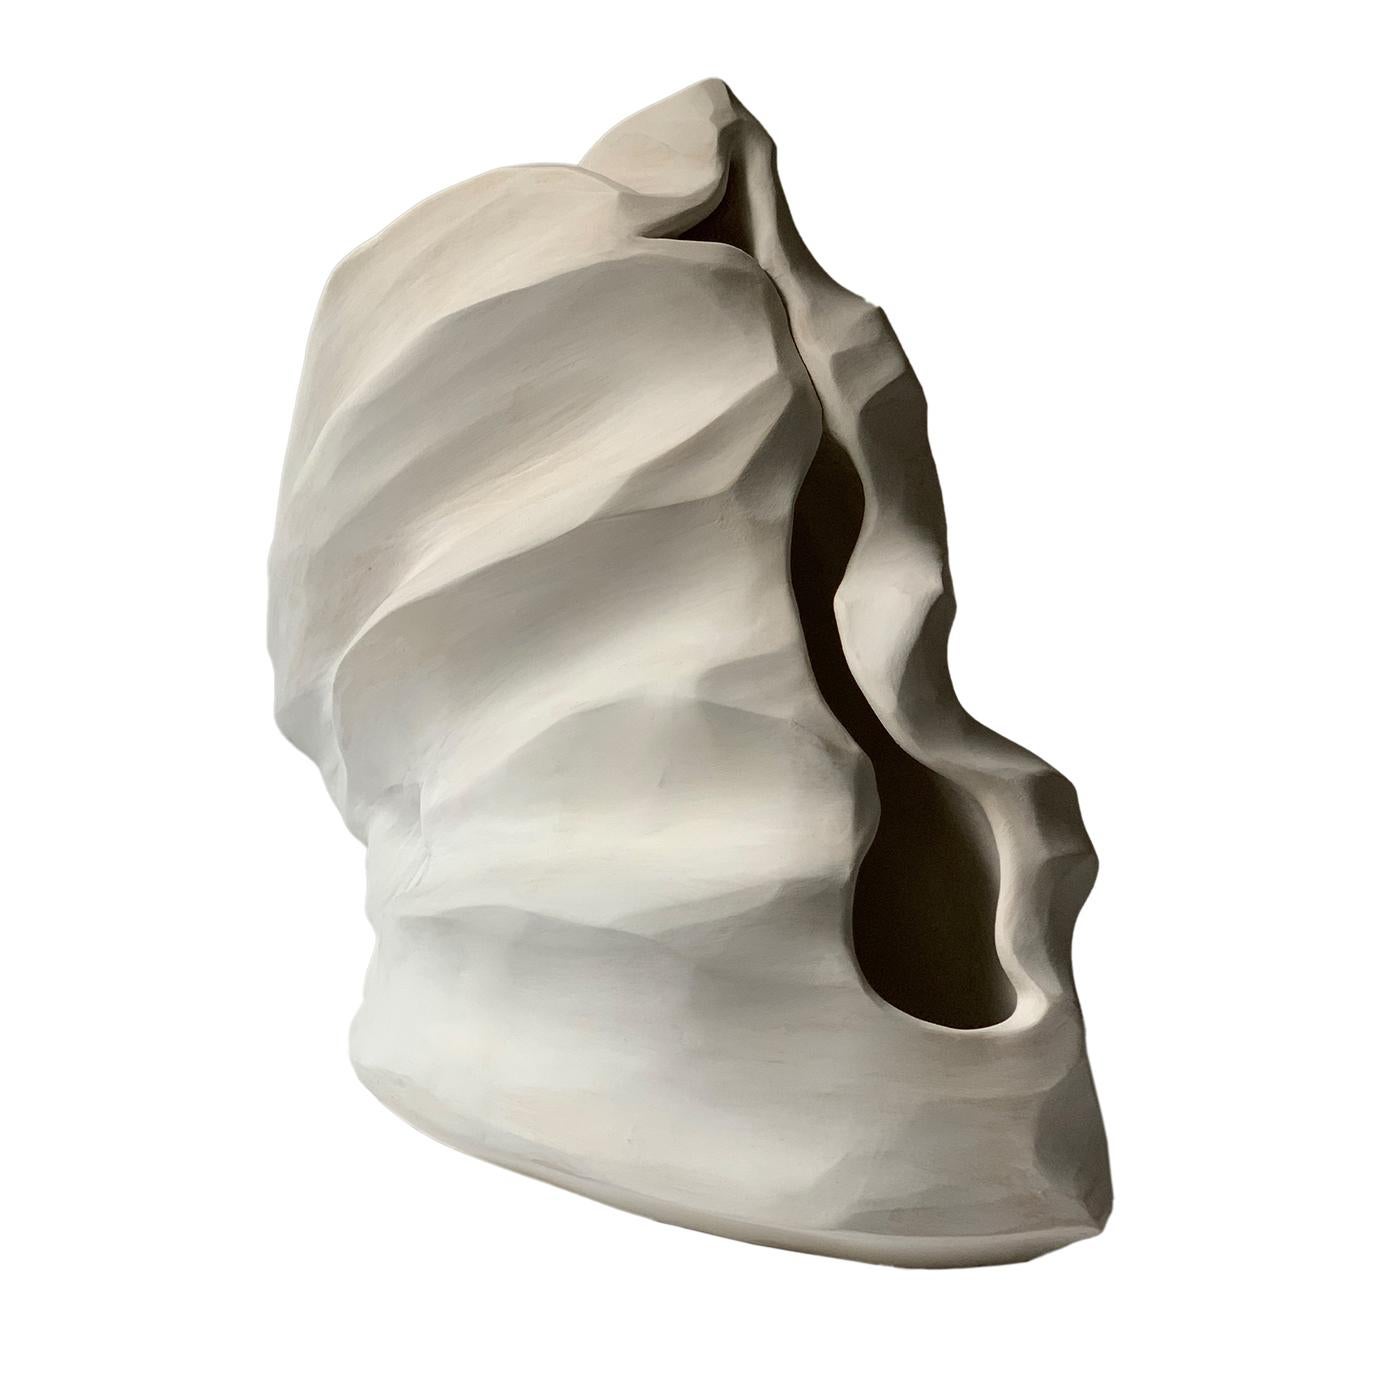 Sculpture d'Intorno al Vuoto en vente